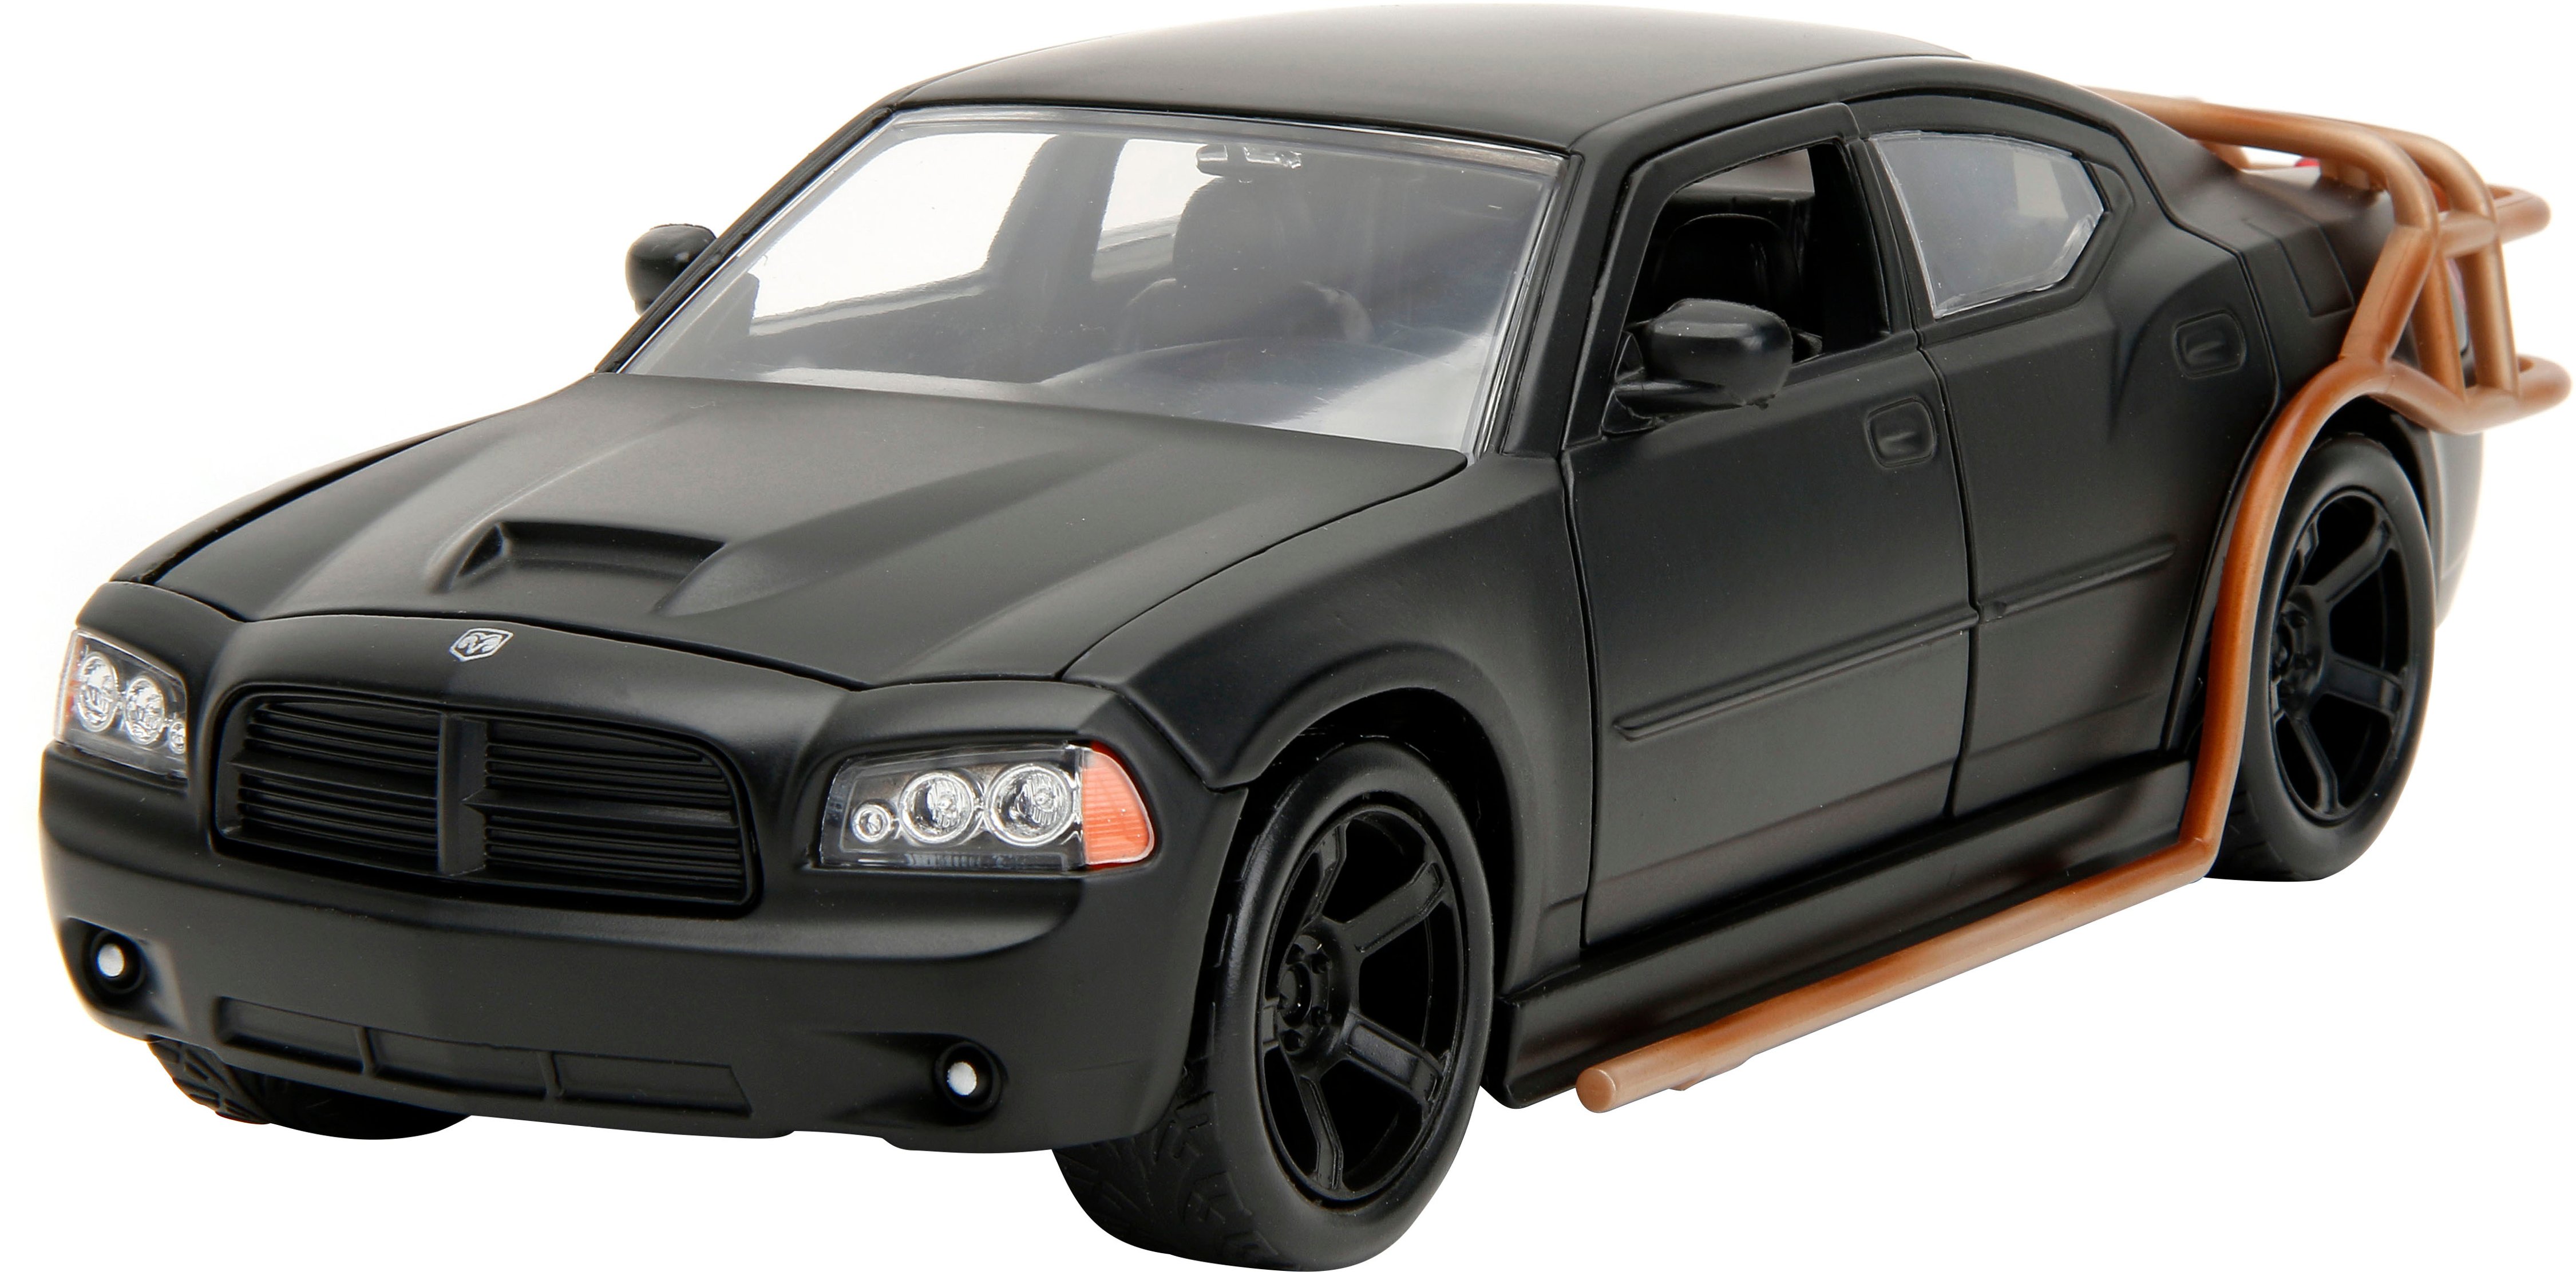 Jada Toys Fast & Furious 1:24 Die-cast Car Vehicle Playset Assortment